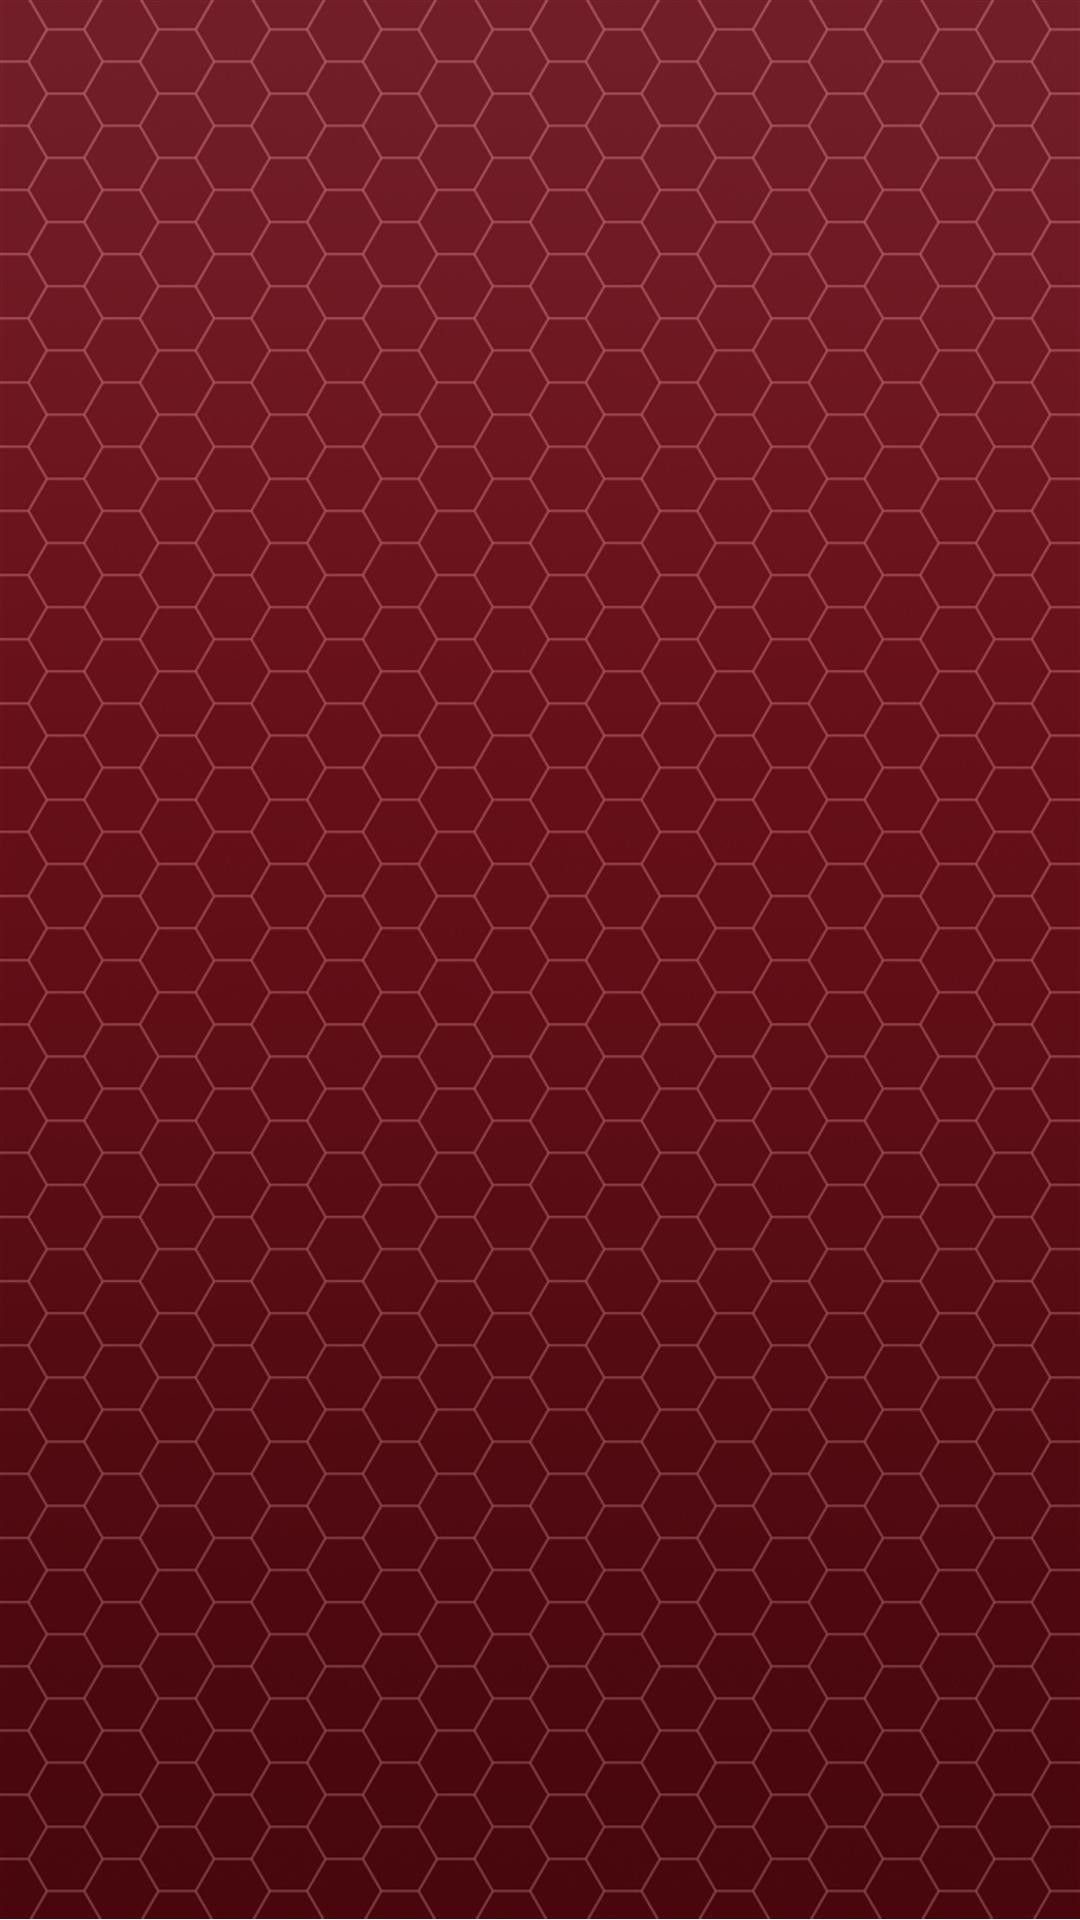 1080x1920 Honeycomb pattern | Hd wallpaper iphone, Android wallpaper, Iphone wallpaper